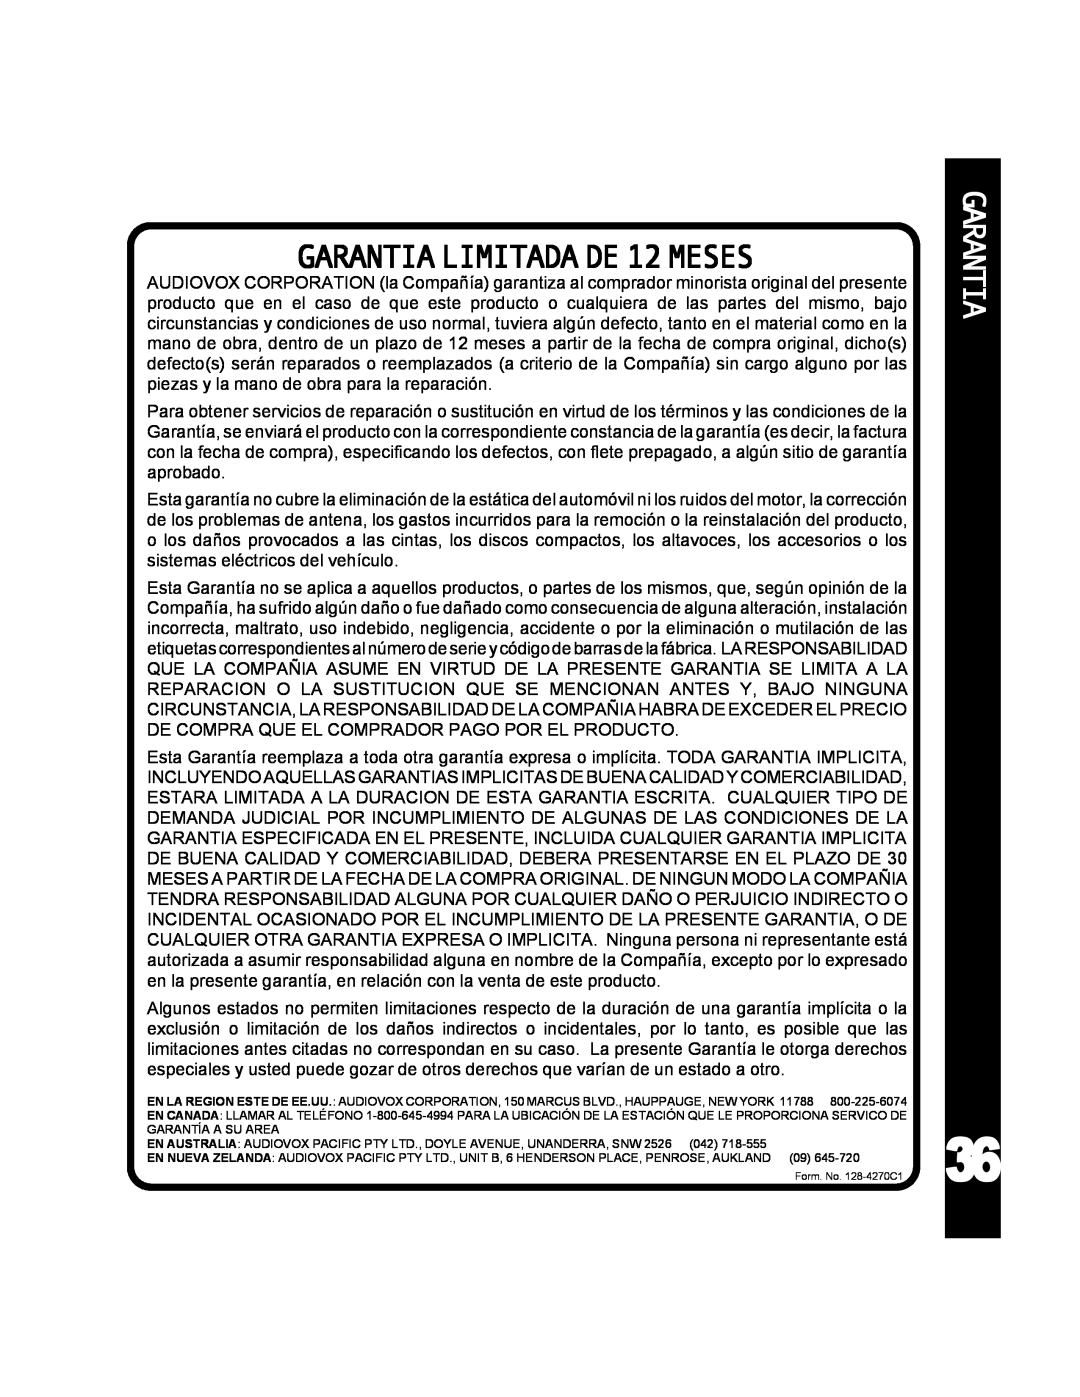 Audiovox ACD-25 manual GARANTIA LIMITADA DE 12 MESES, Garantia 